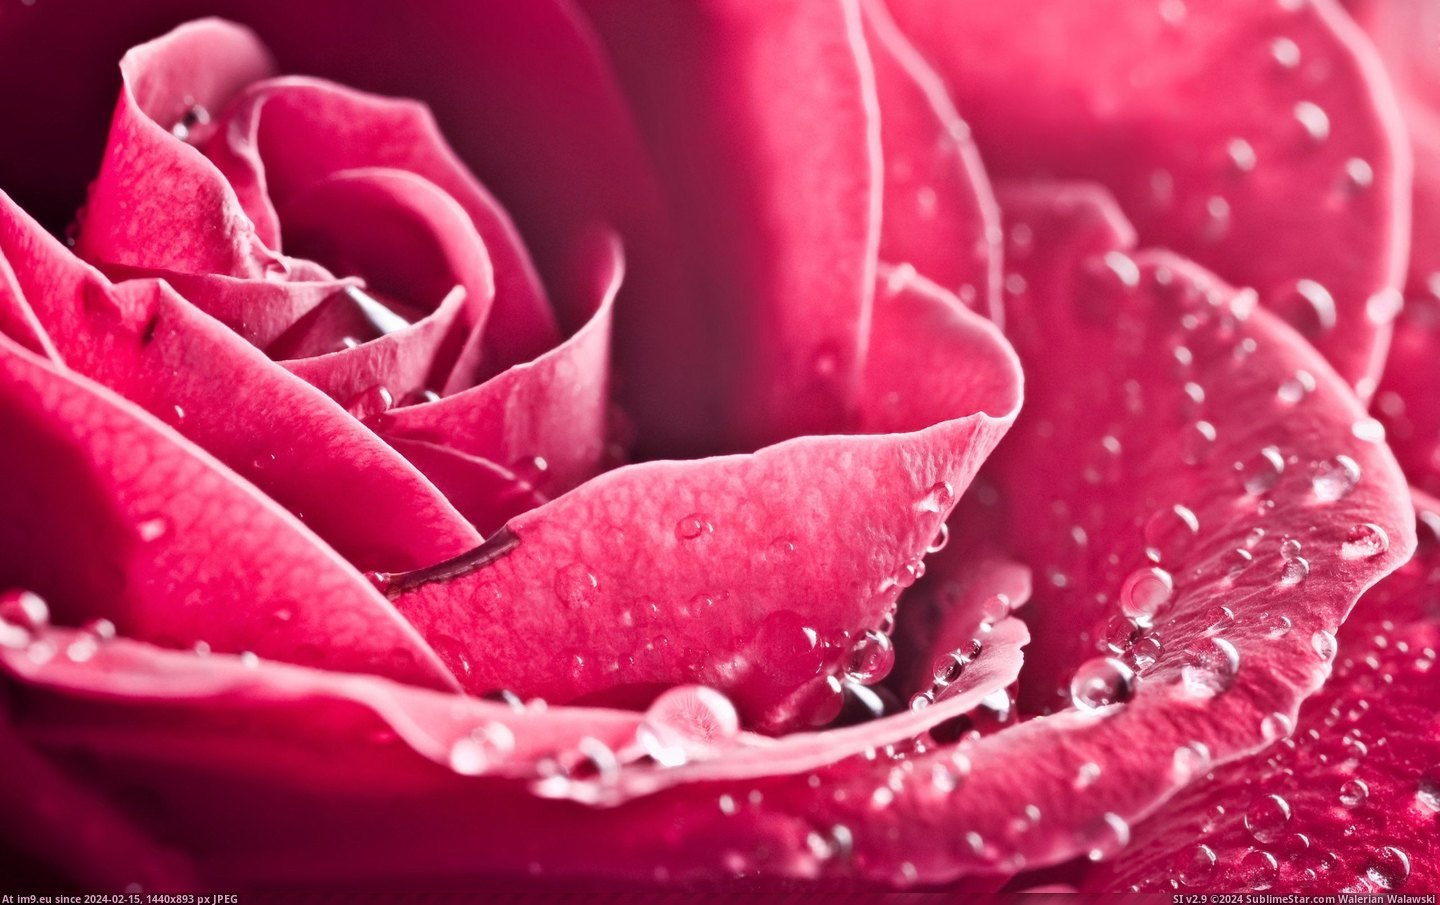 #Wallpaper #Rose #Special #Wide Special Rose Wide HD Wallpaper Pic. (Изображение из альбом Unique HD Wallpapers))